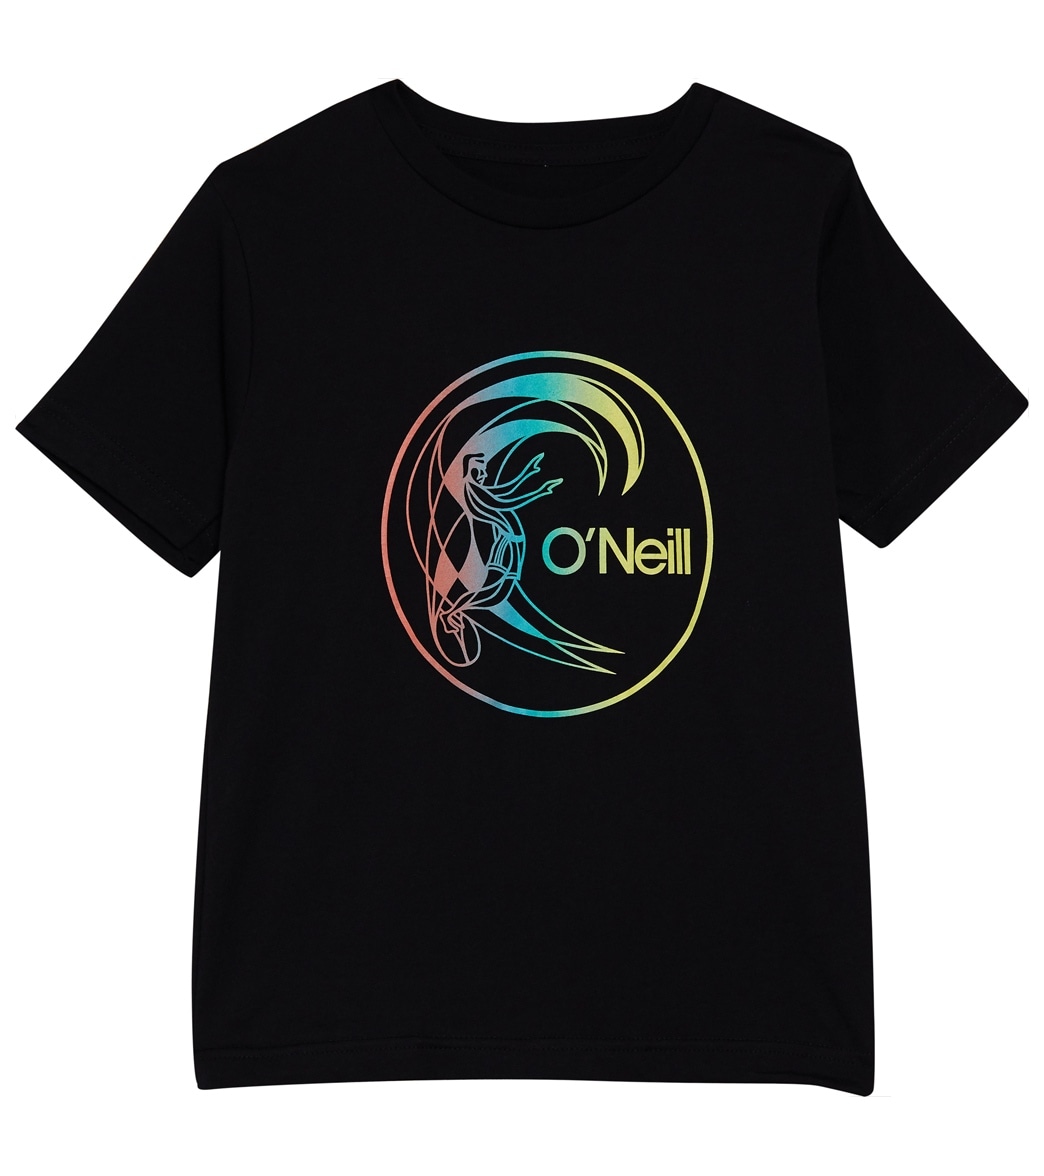 O'neill Boys' Rainbow T-Shirt Big Kid - Black Lg 14-16 Big Size Large Cotton - Swimoutlet.com